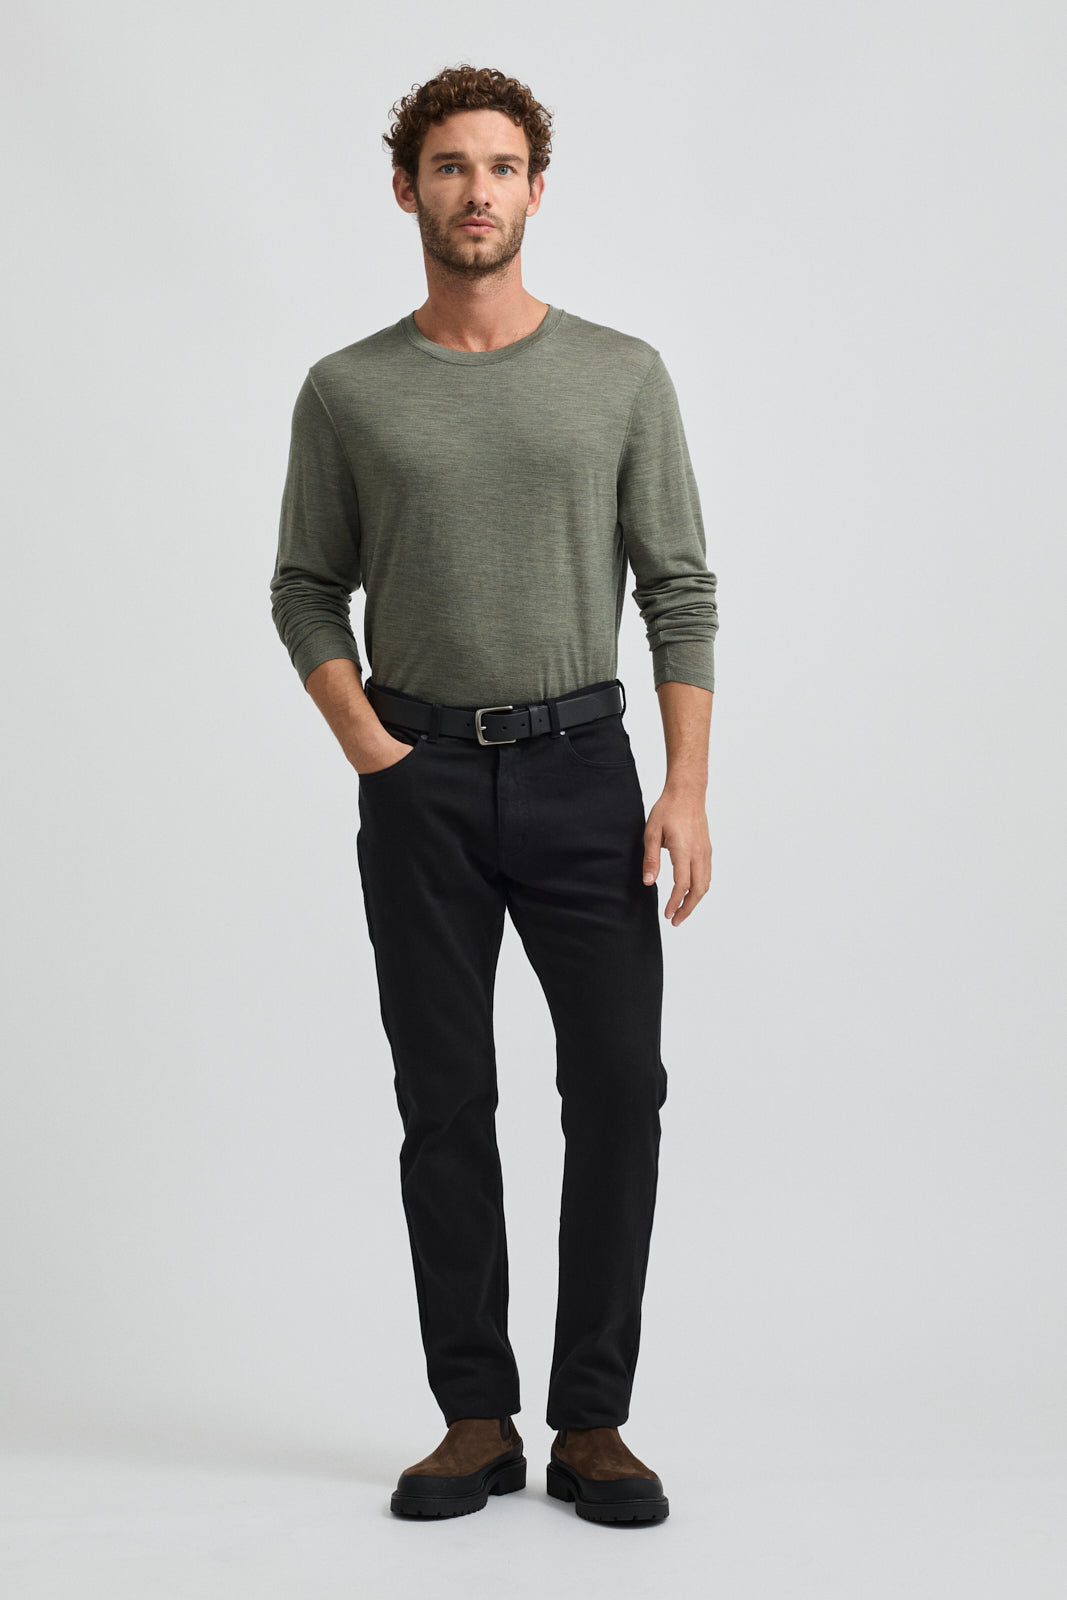 Merino Long Sleeve T-Shirt | Olive - Toorallie - Beechworth Emporium